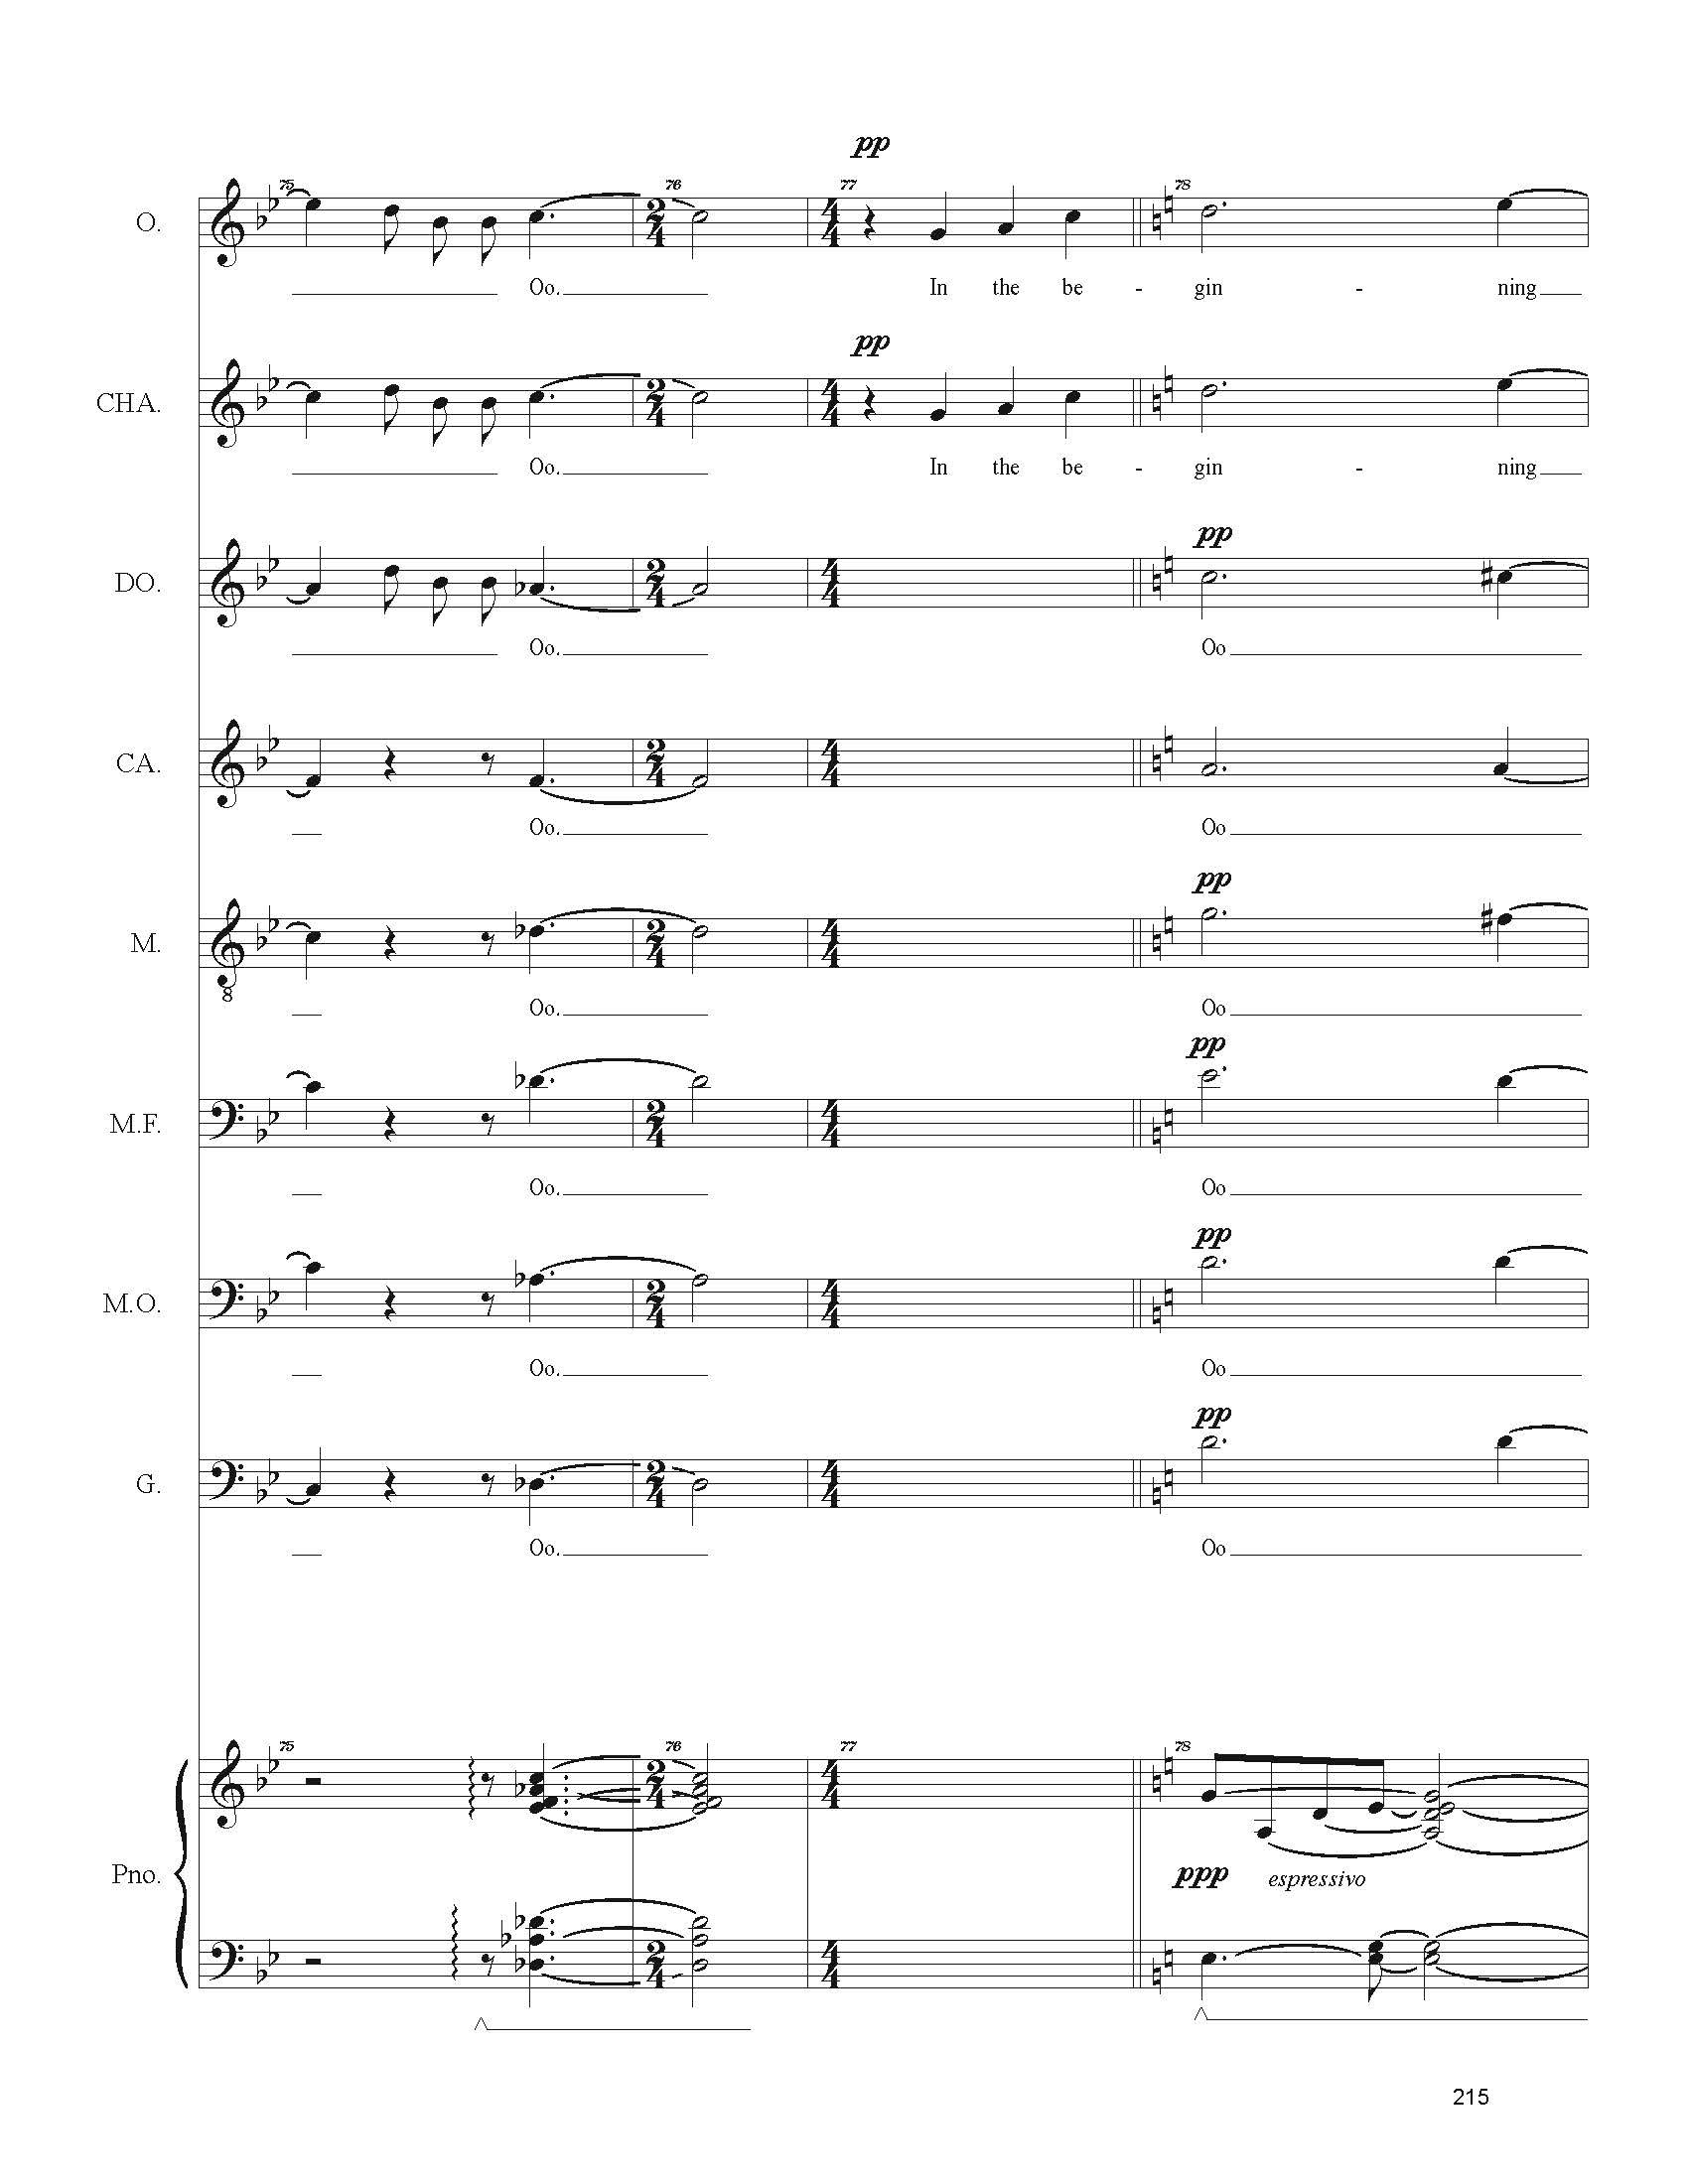 FULL PIANO VOCAL SCORE DRAFT 1 - Score_Page_215.jpg